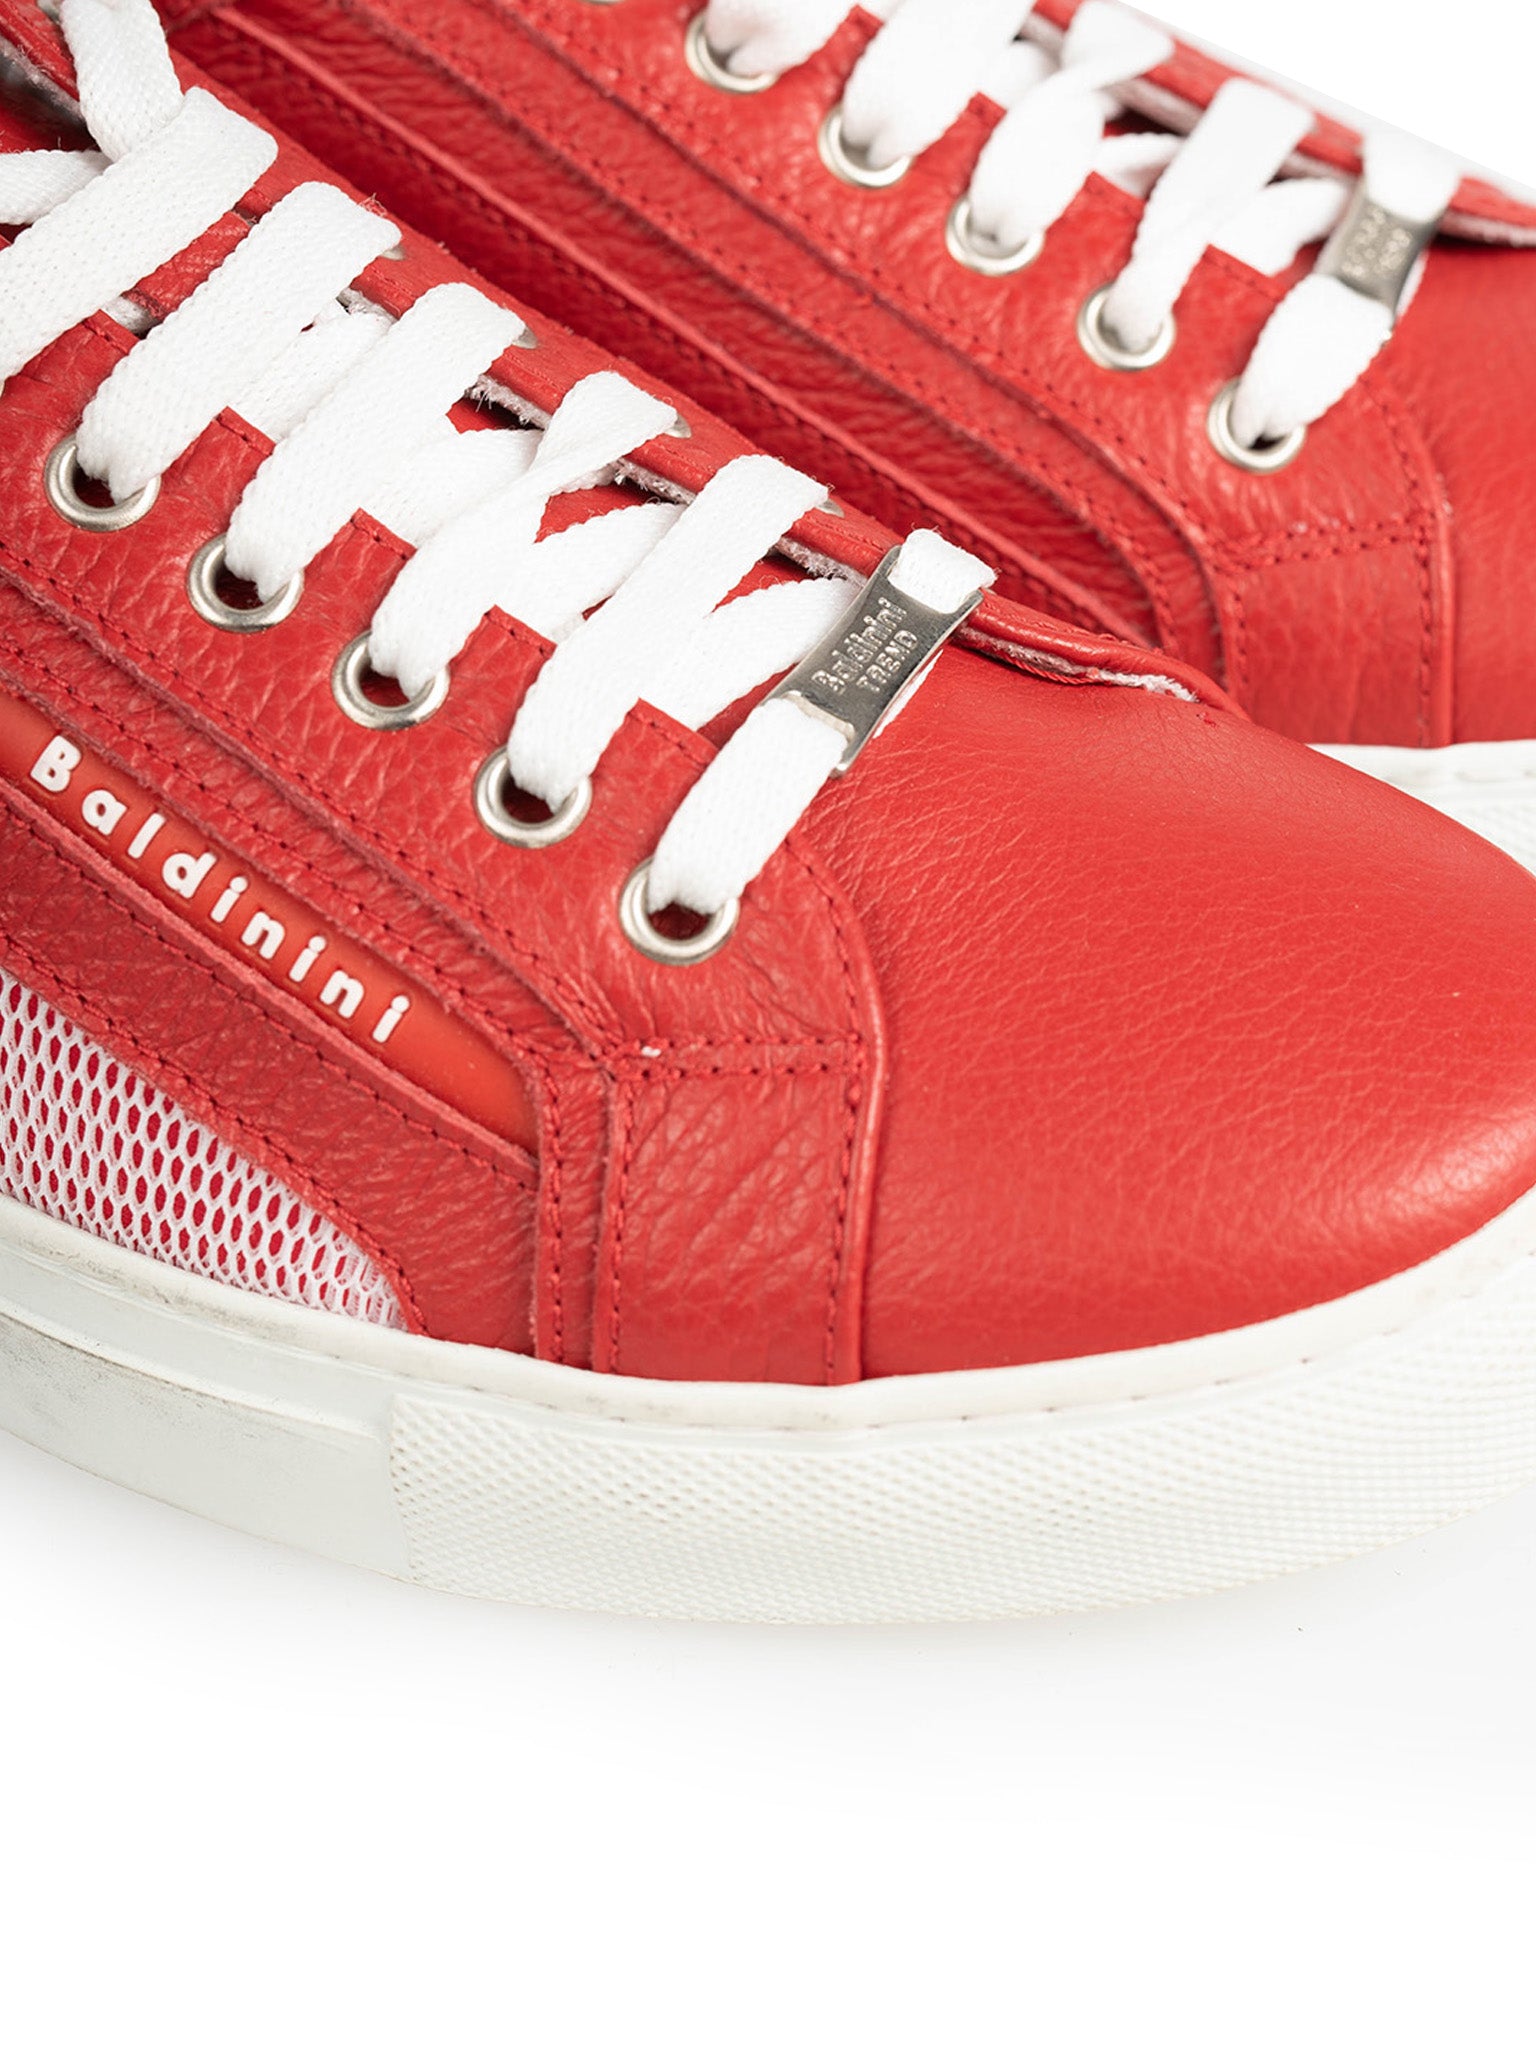 Baldinini Blubber low-top Leather Sneakers - Farfetch